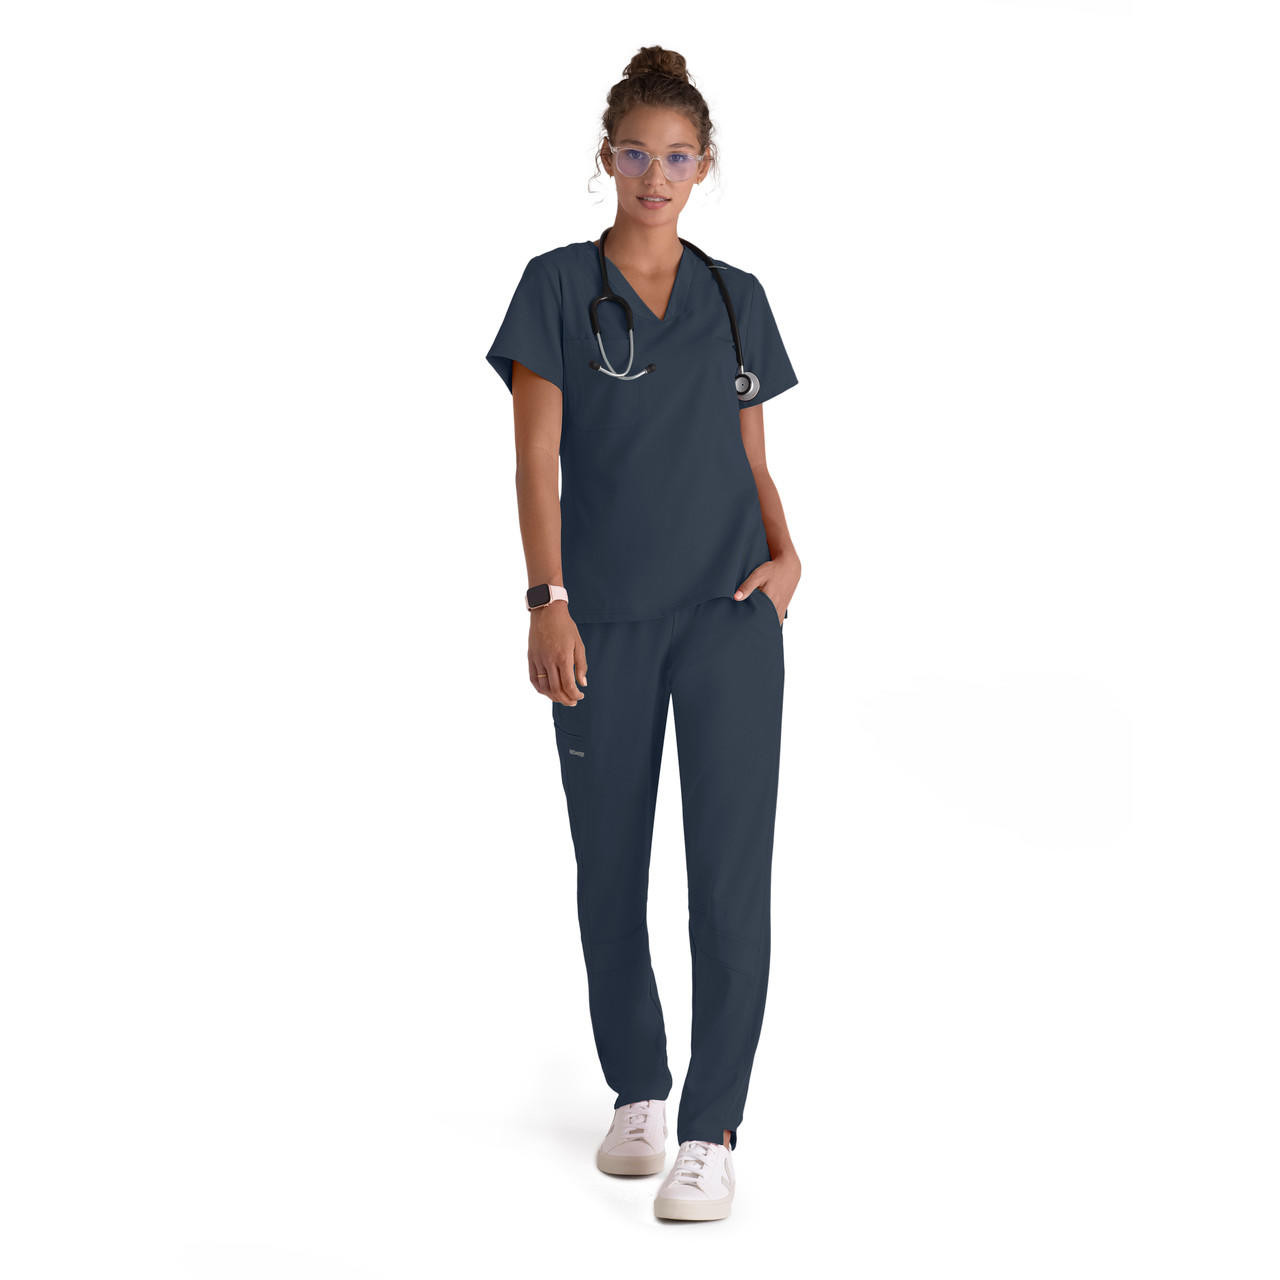 Women's Grey Anatomy spandex medical scrub pants